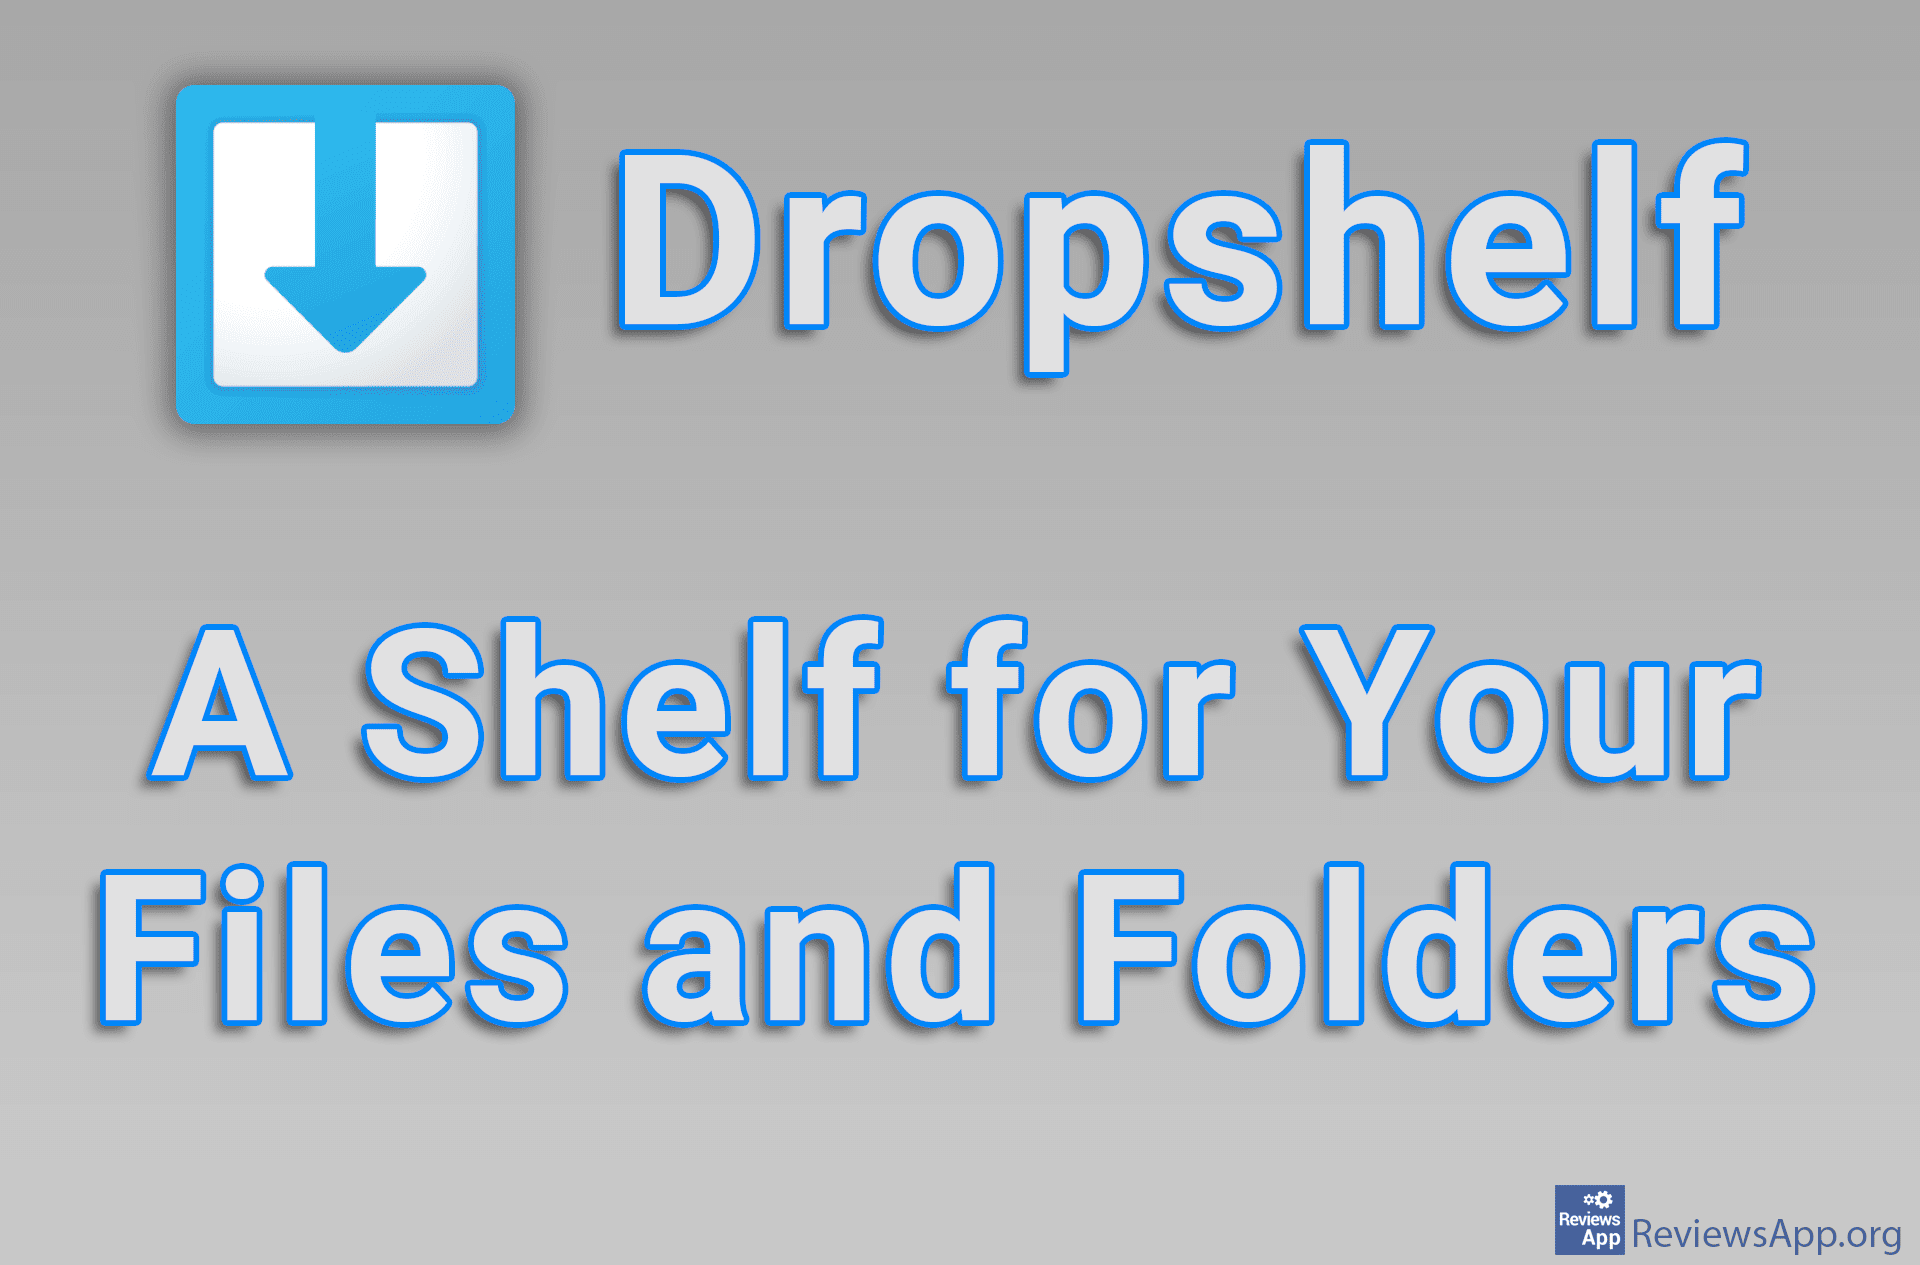 Dropshelf – A Shelf for Your Files and Folders